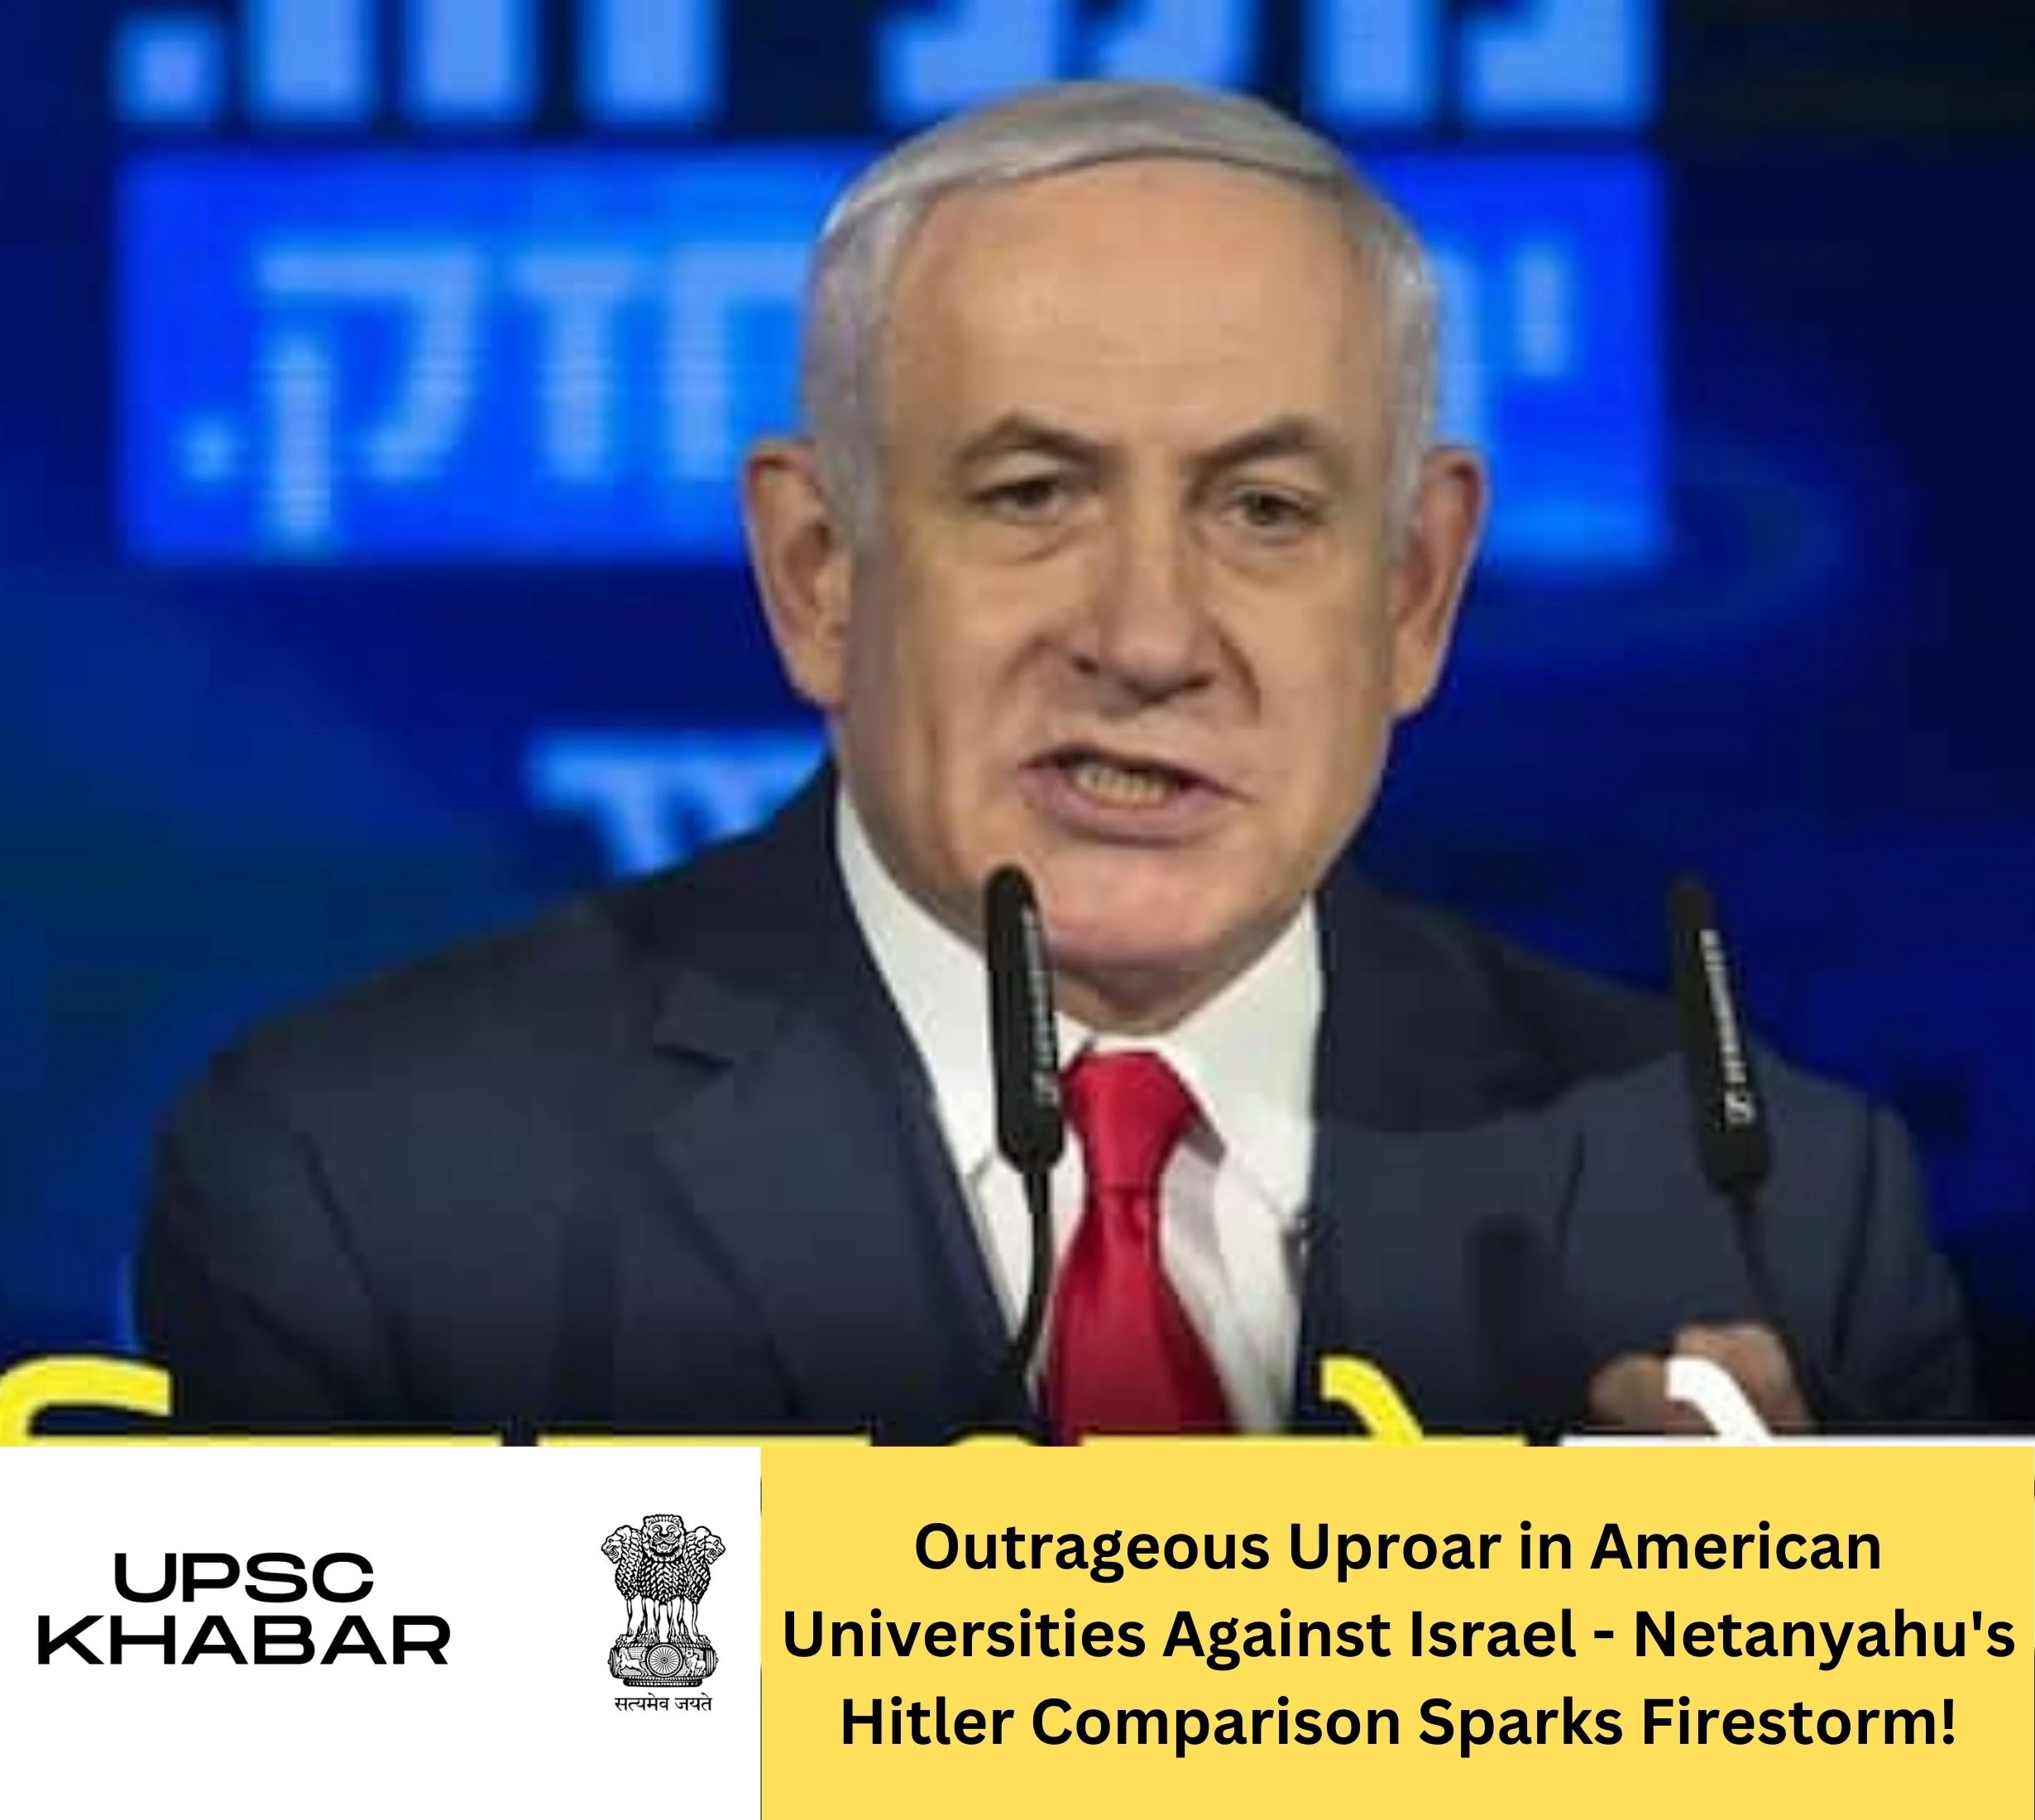 Outrageous Uproar in American Universities Against Israel - Netanyahu's Hitler Comparison Sparks Firestorm!